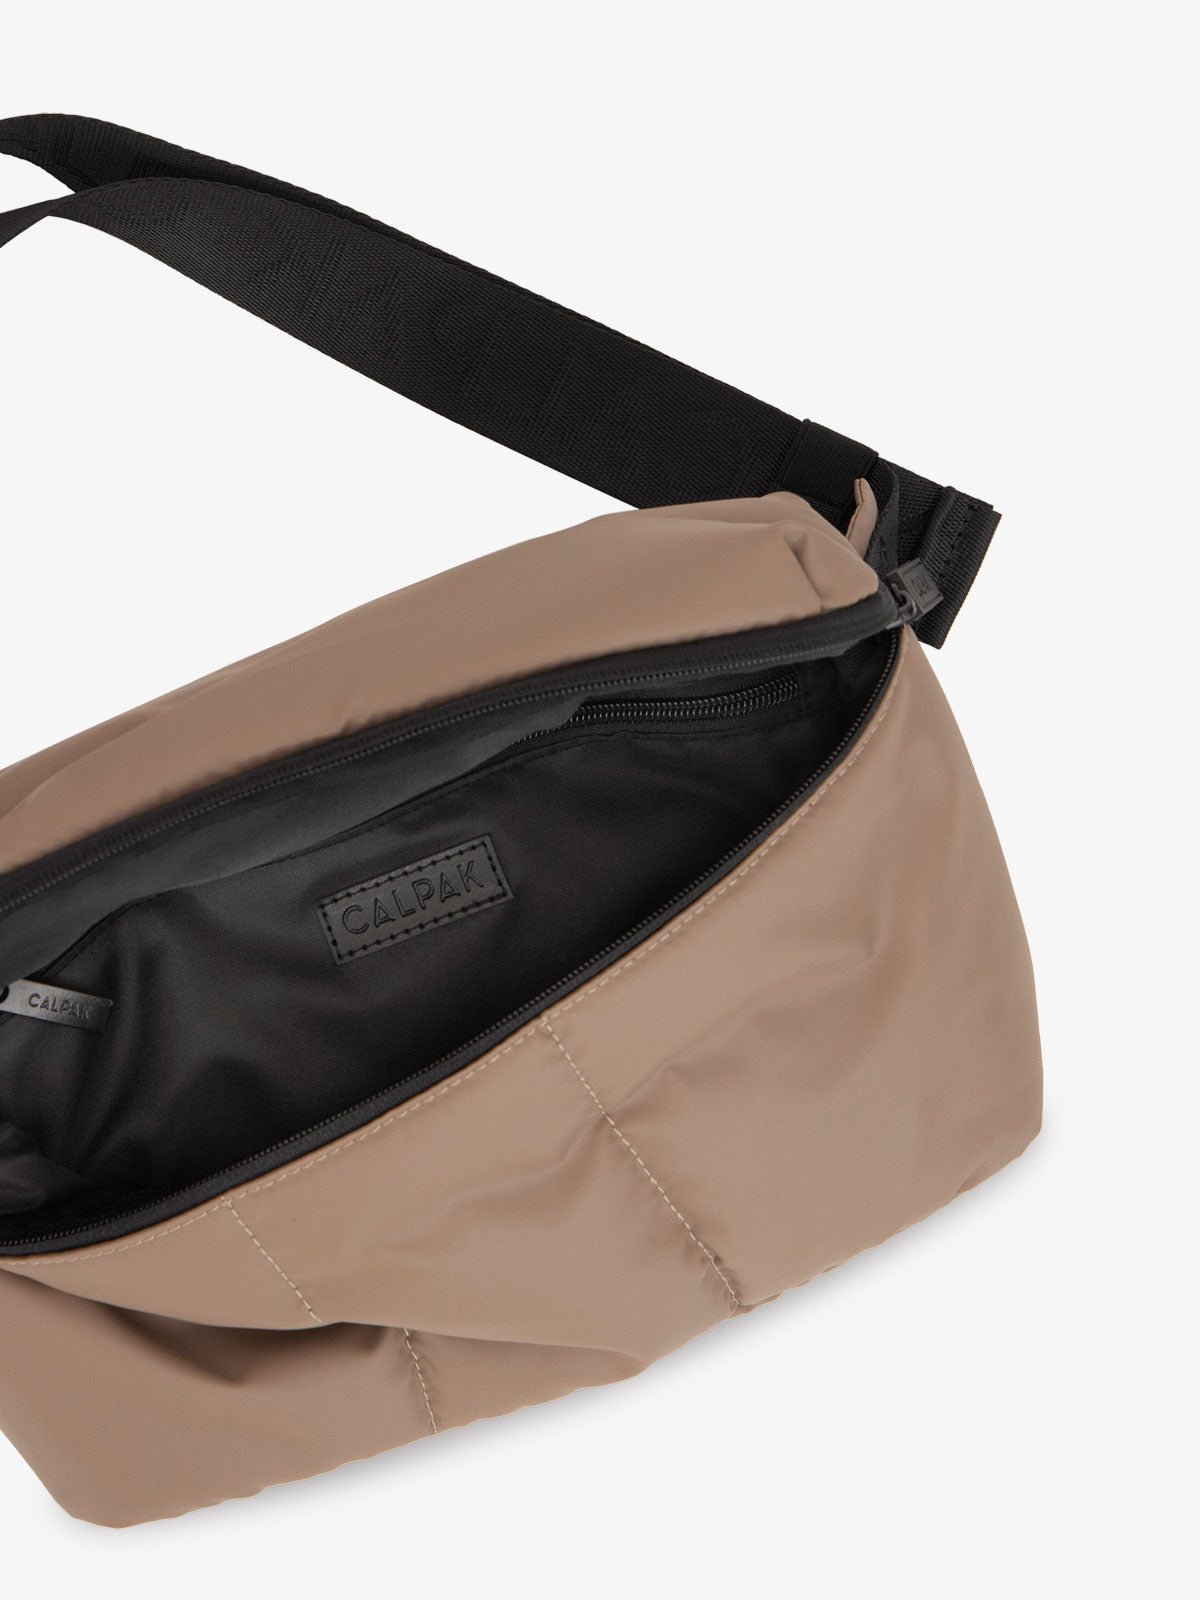 chocolate Luka belt bag with adjustable crossbody strap